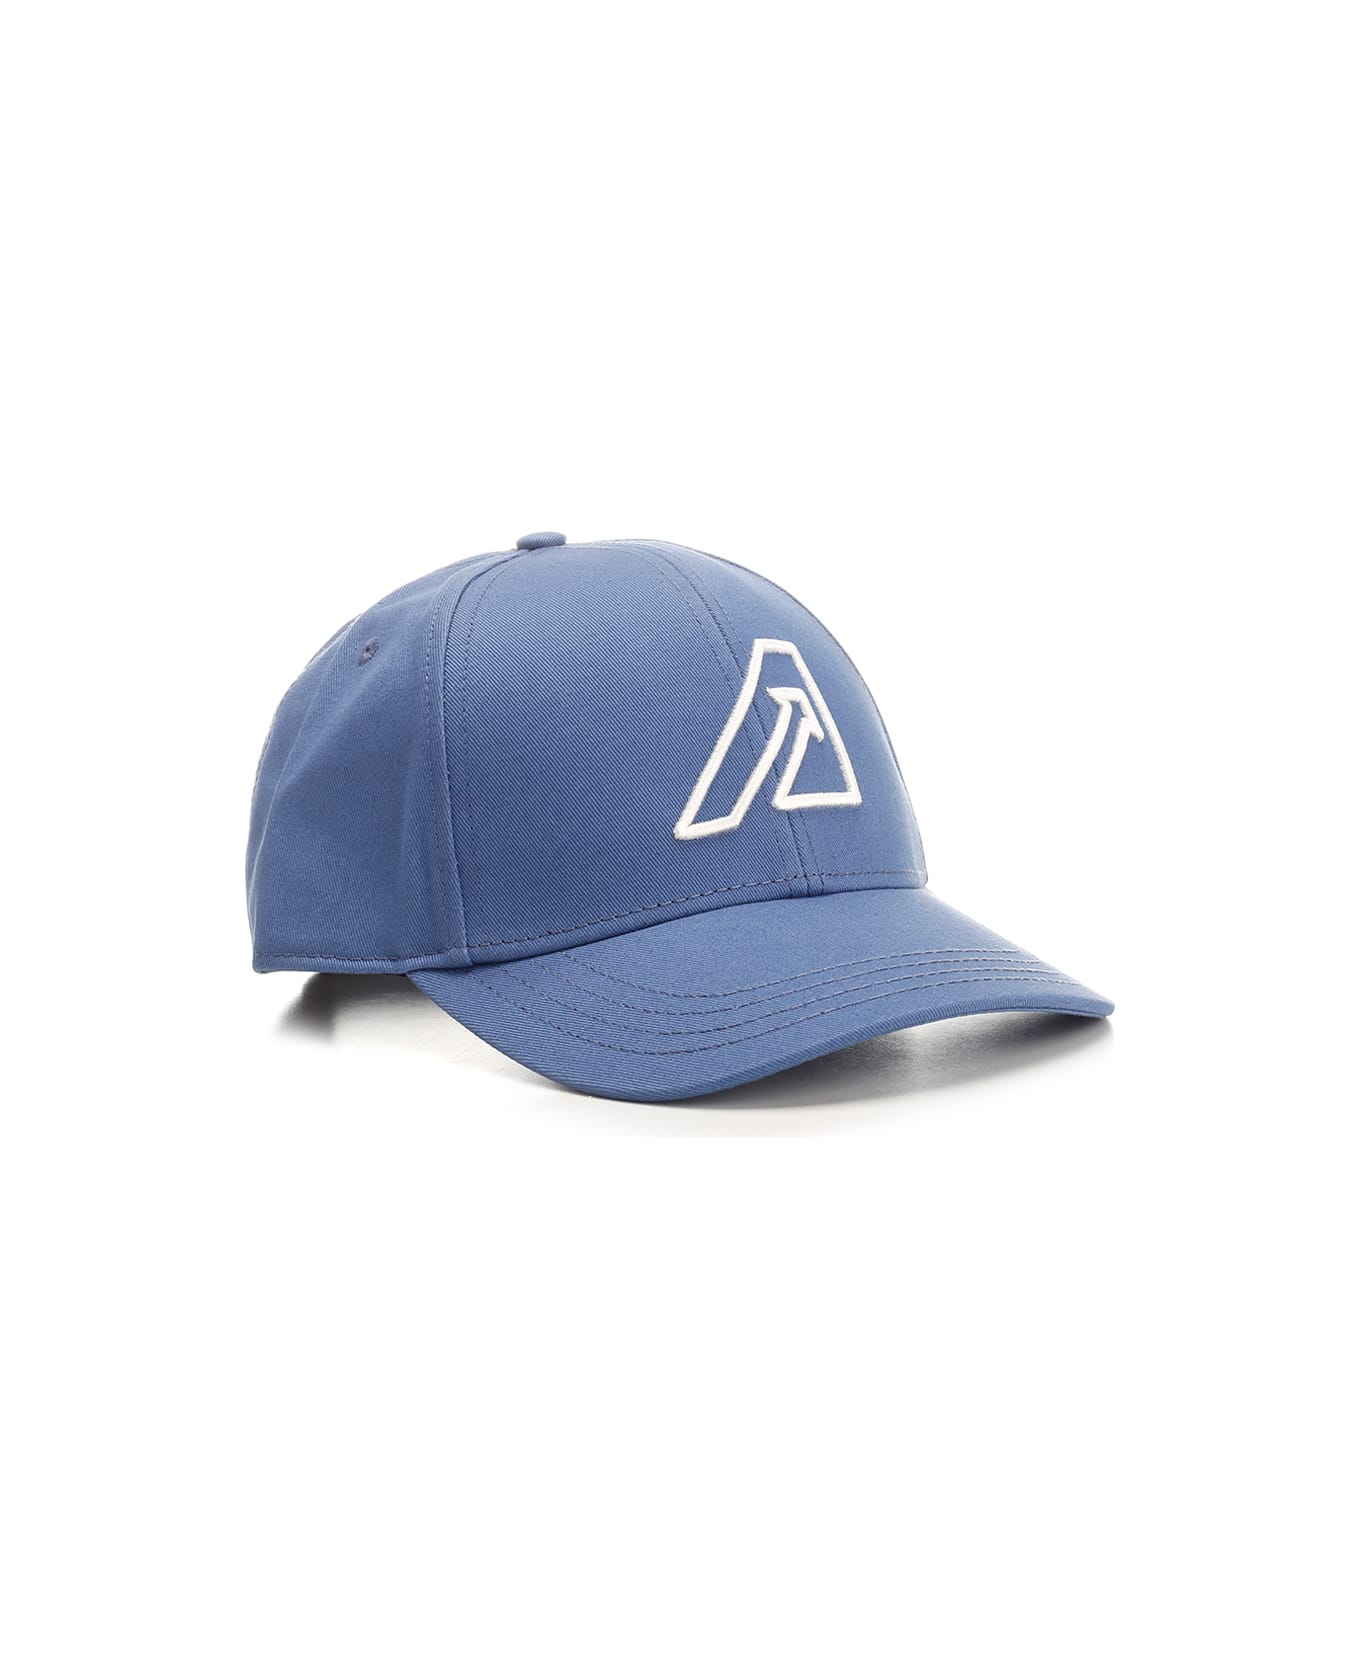 Autry Light Blue Cap With Logo - Light blue